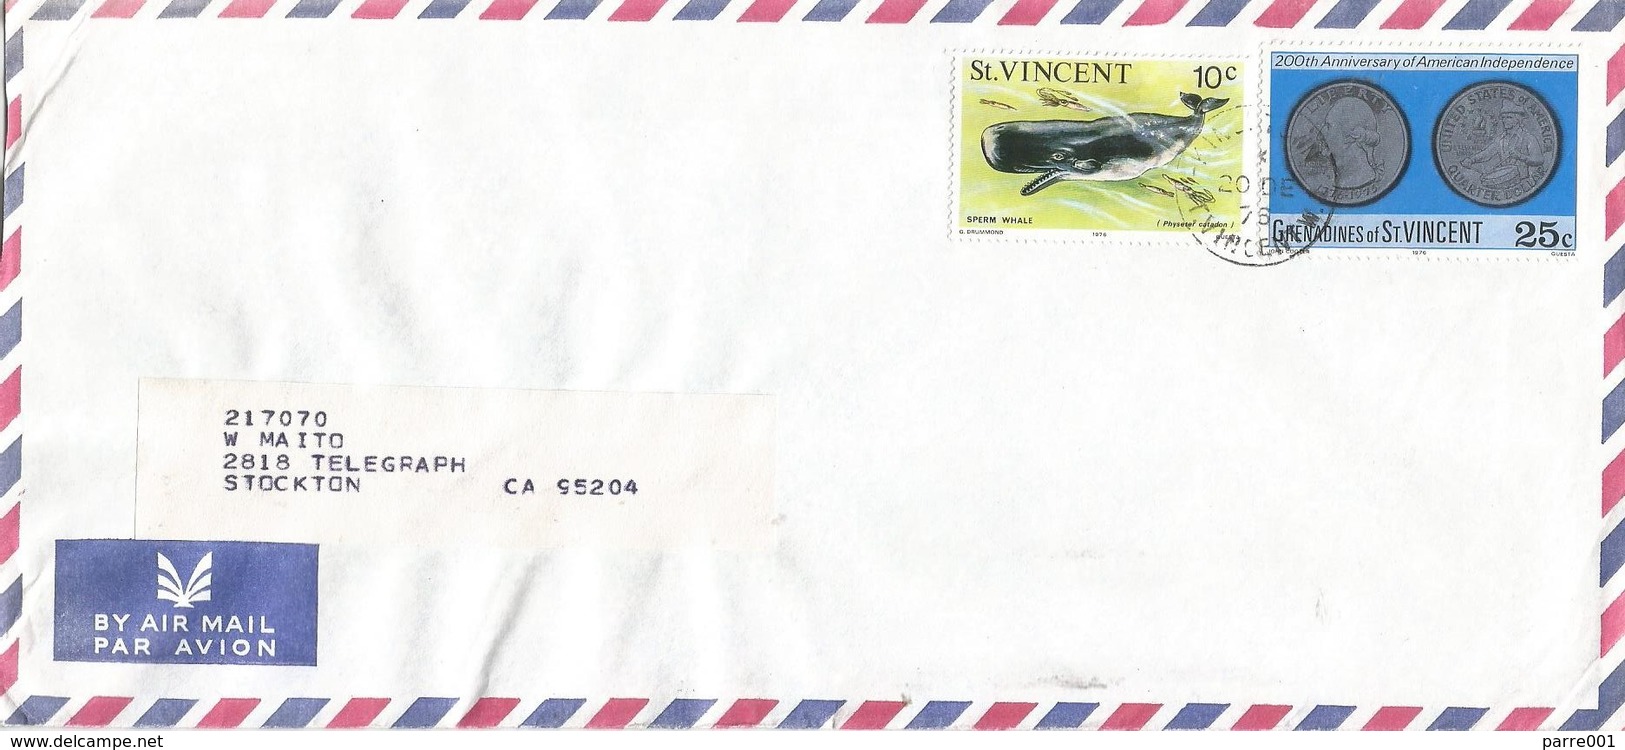 St Vincent 1975 Kingstown American Independence George Washington Coin Sperm Whale Cover - Onafhankelijkheid USA